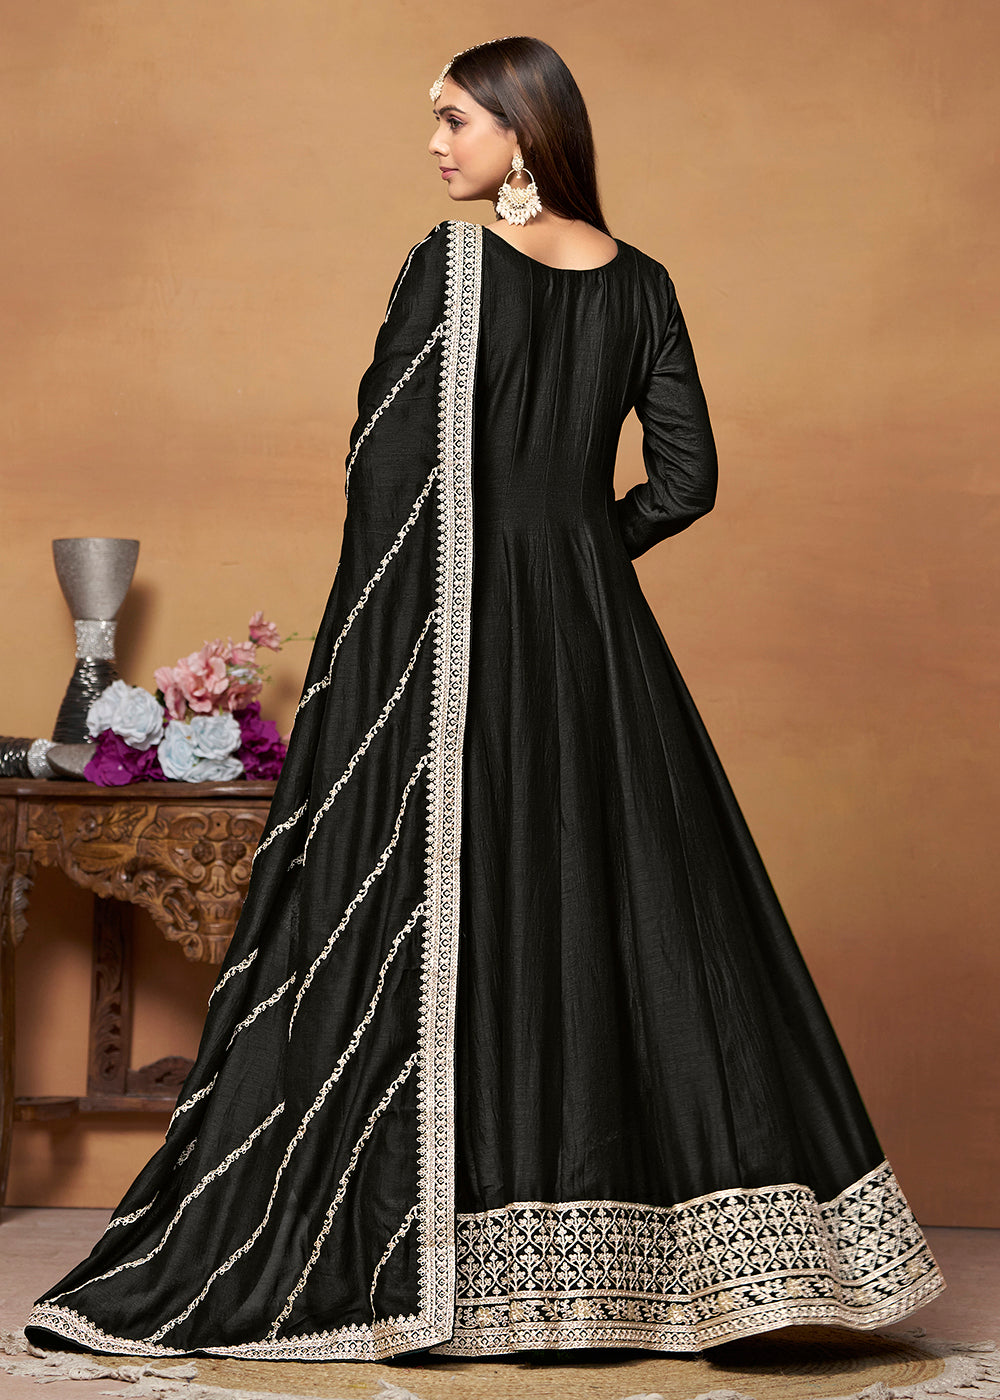 Buy Now Amazing Art Silk Black Embroidered Festive Anarkali Suit Online in USA, UK, Australia, New Zealand, Canada & Worldwide at Empress Clothing. 